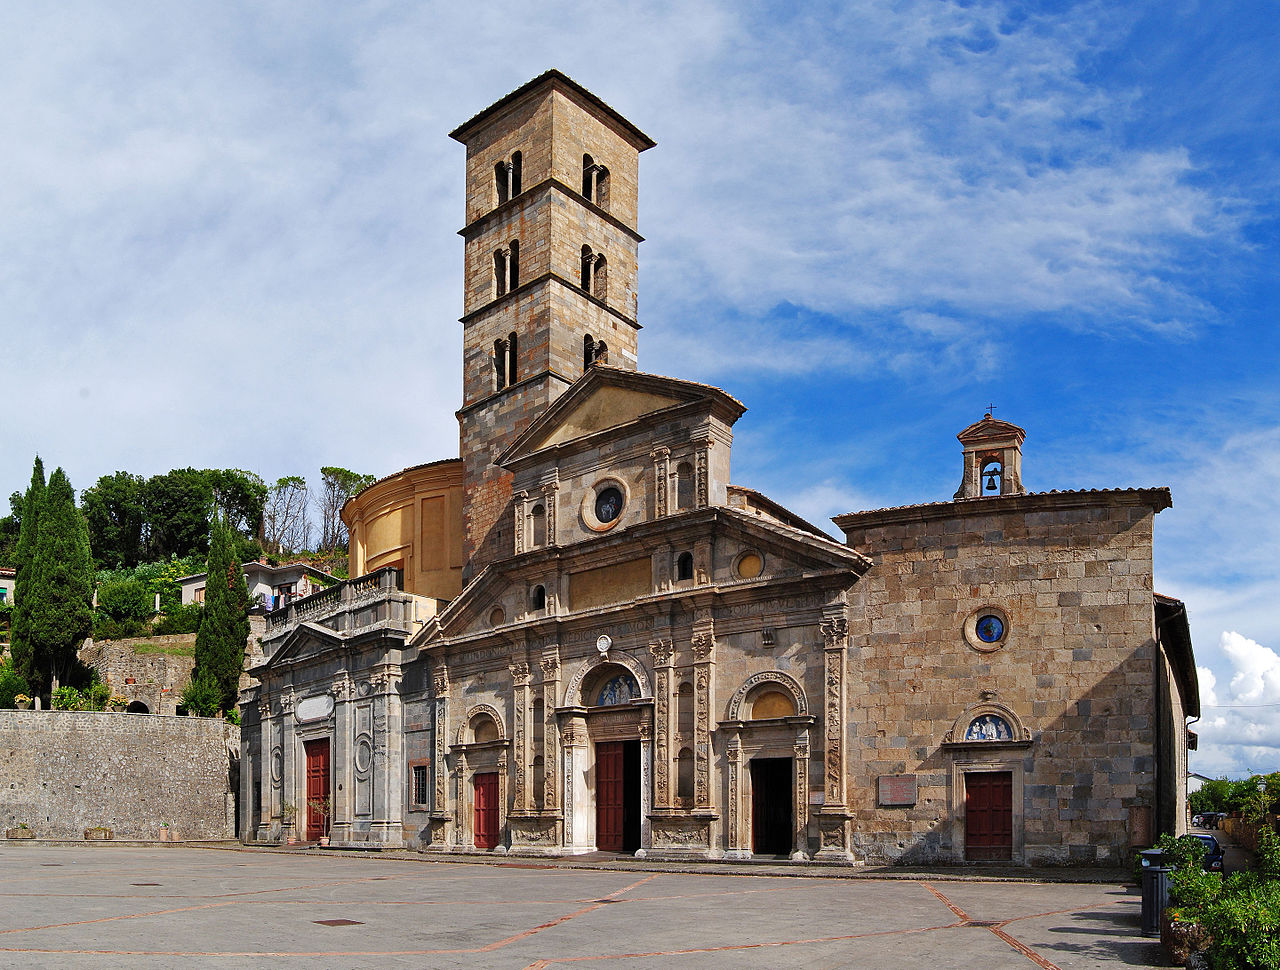 The Basilica of Santa Cristina in Bolsena